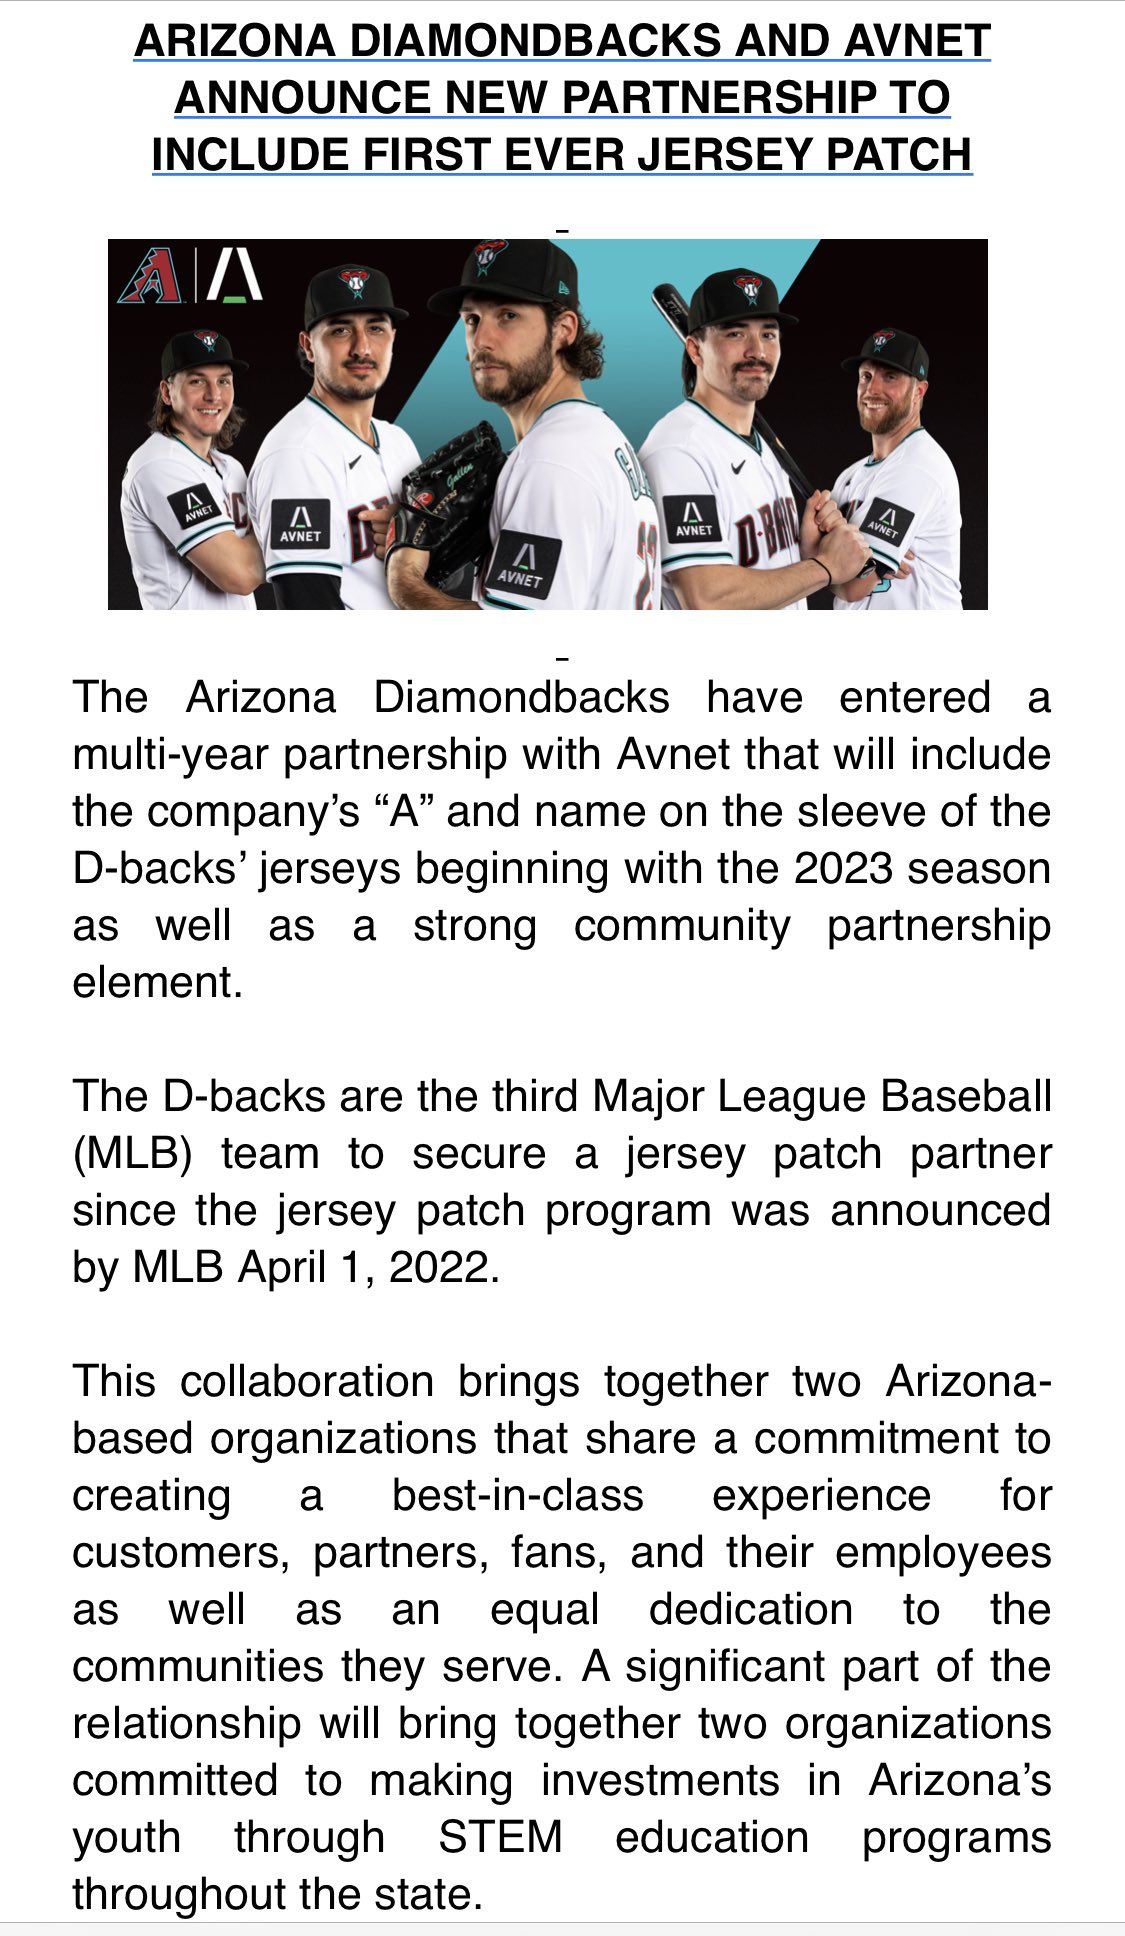 Arizona Diamondbacks, Avnet partner for jersey patch during 2023